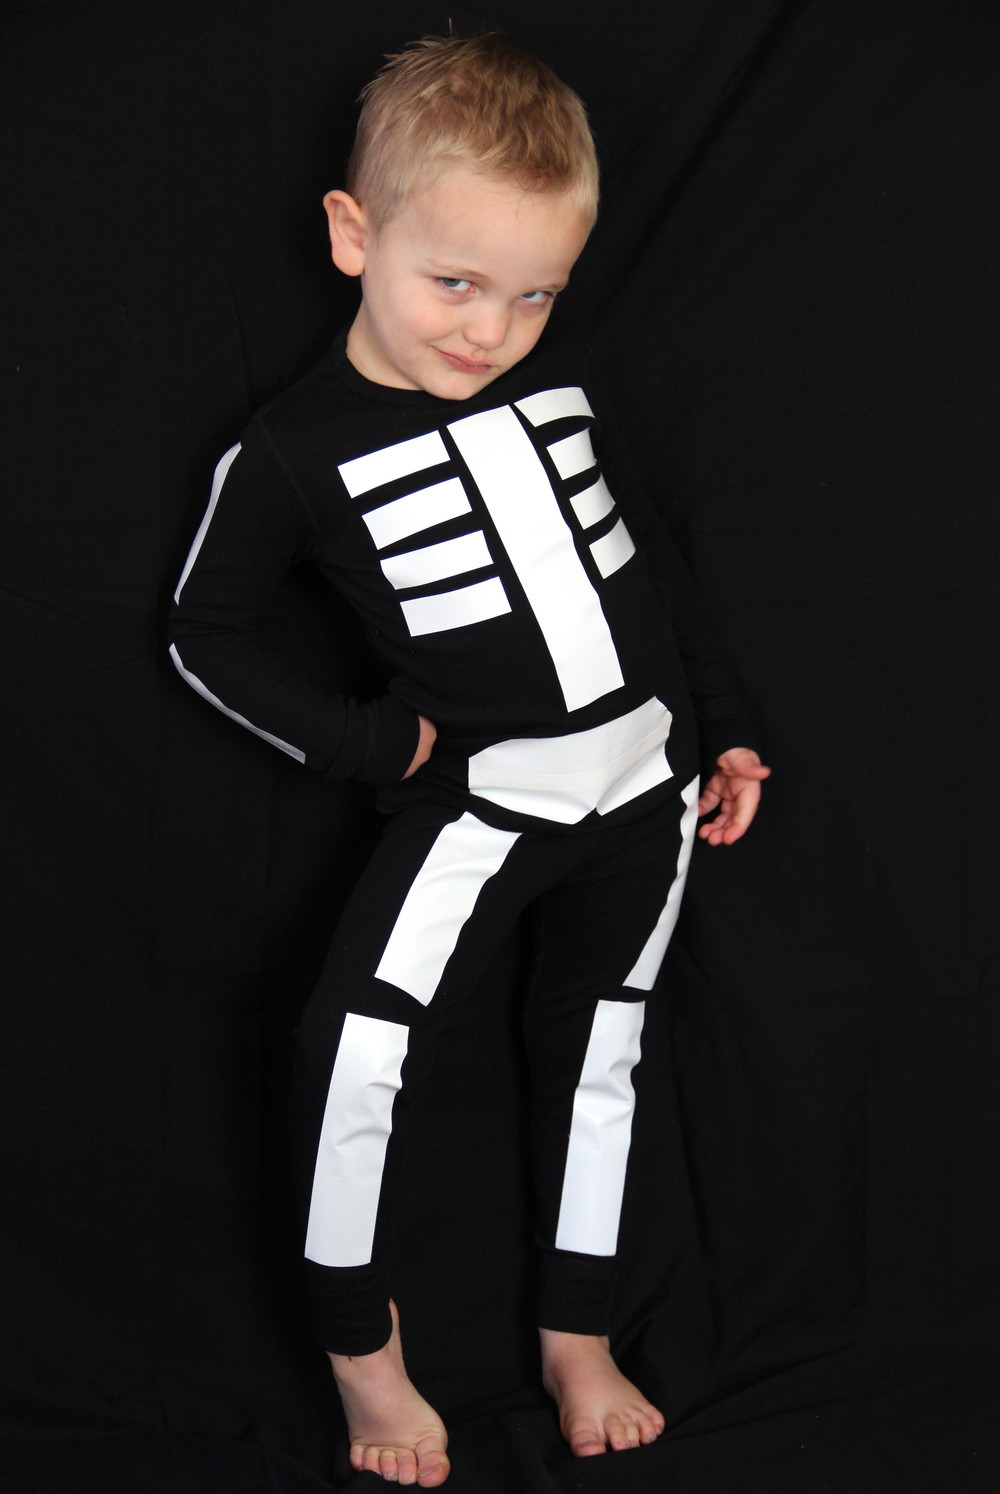 DIY Kids Skeleton Costume
 DUCT TAPE SKELETON COSTUME — And We Play